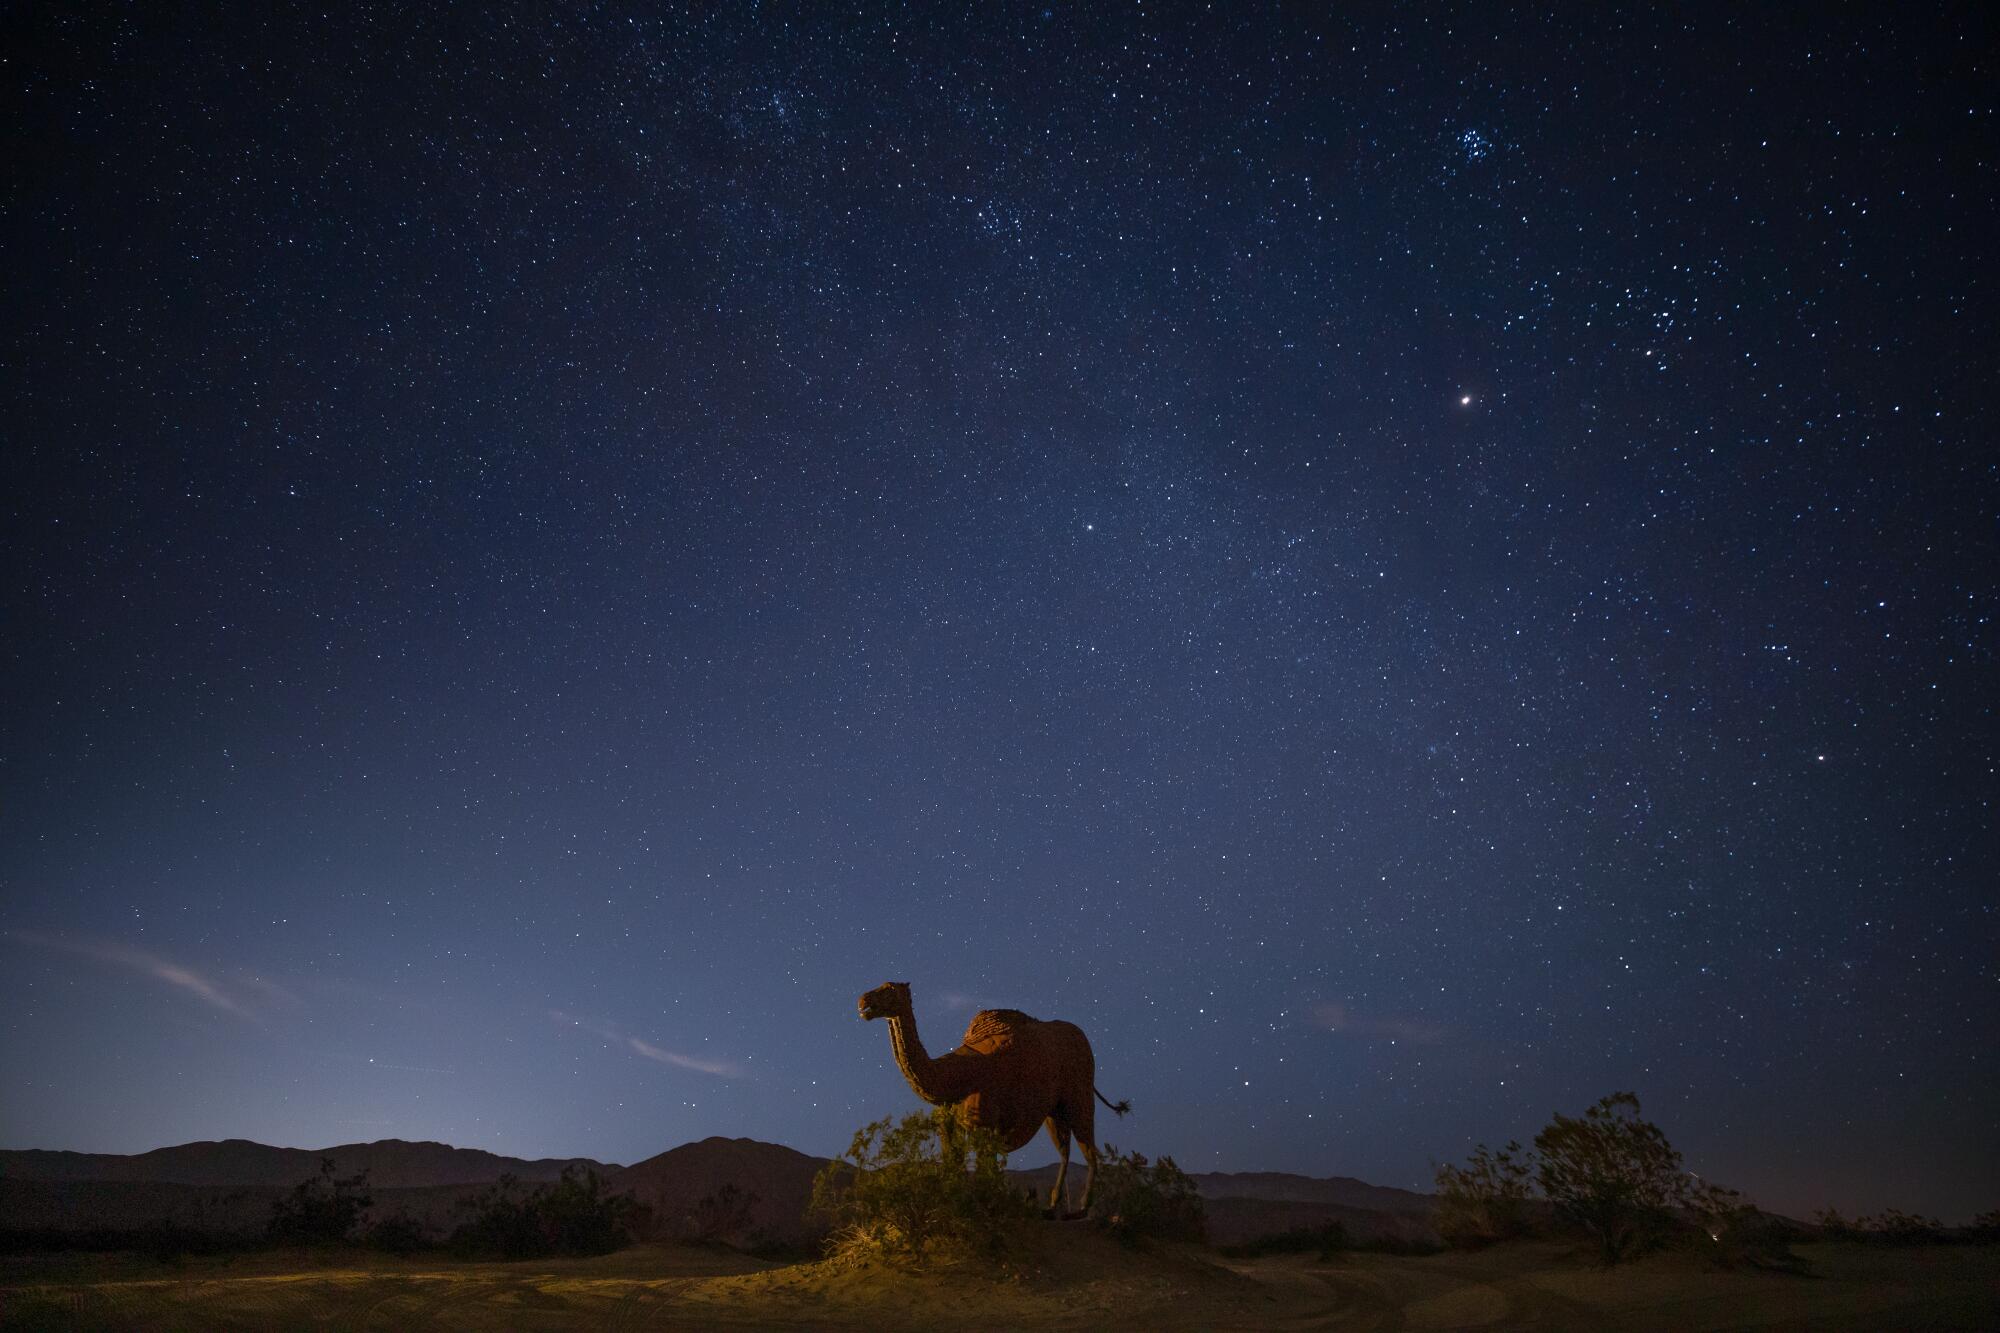 A starry desert sky above a landscape a partially lighted camel statue.